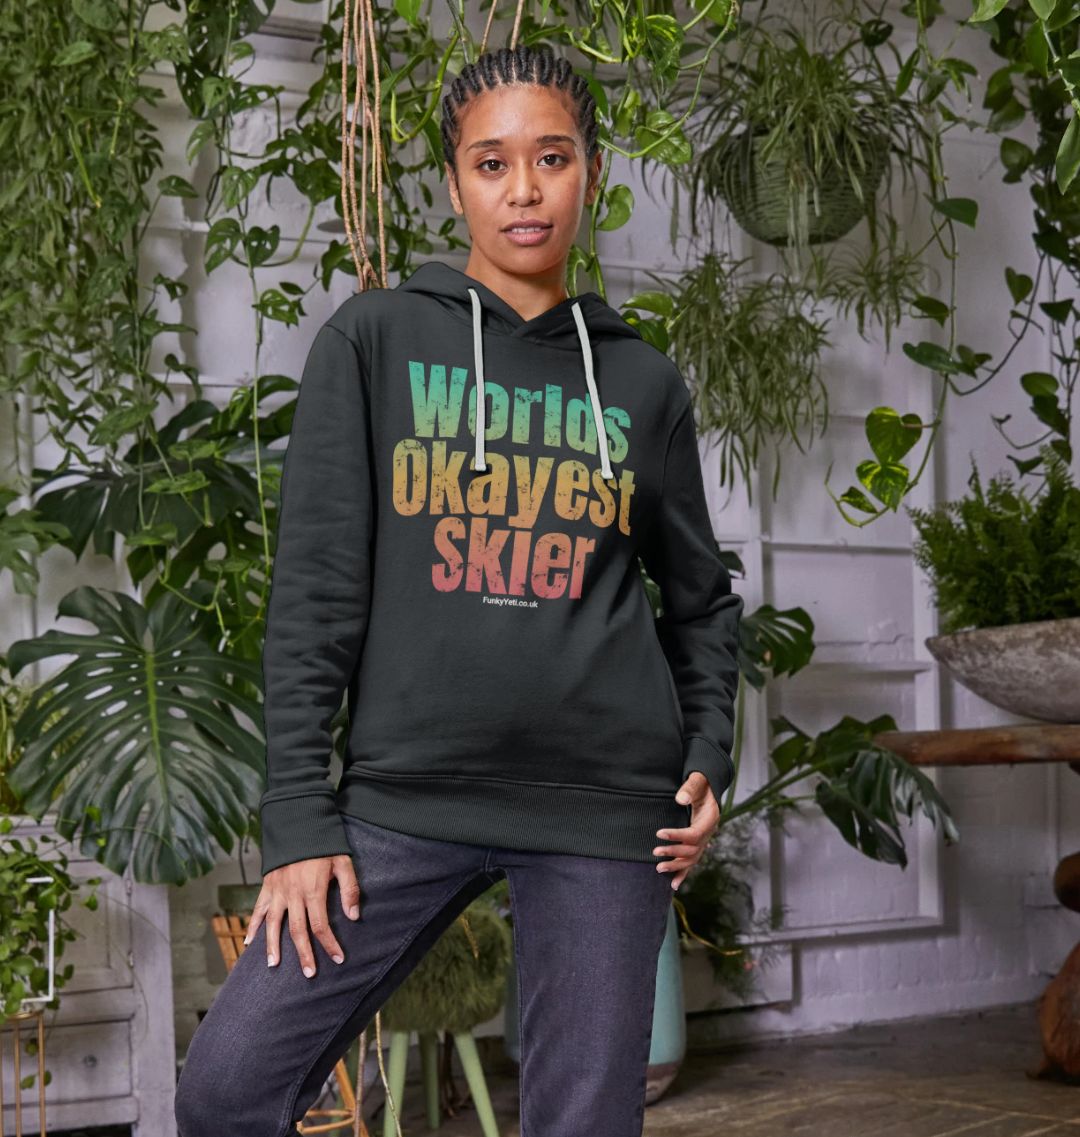 Women's Worlds Okayest Skier Organic Pullover Hoodie